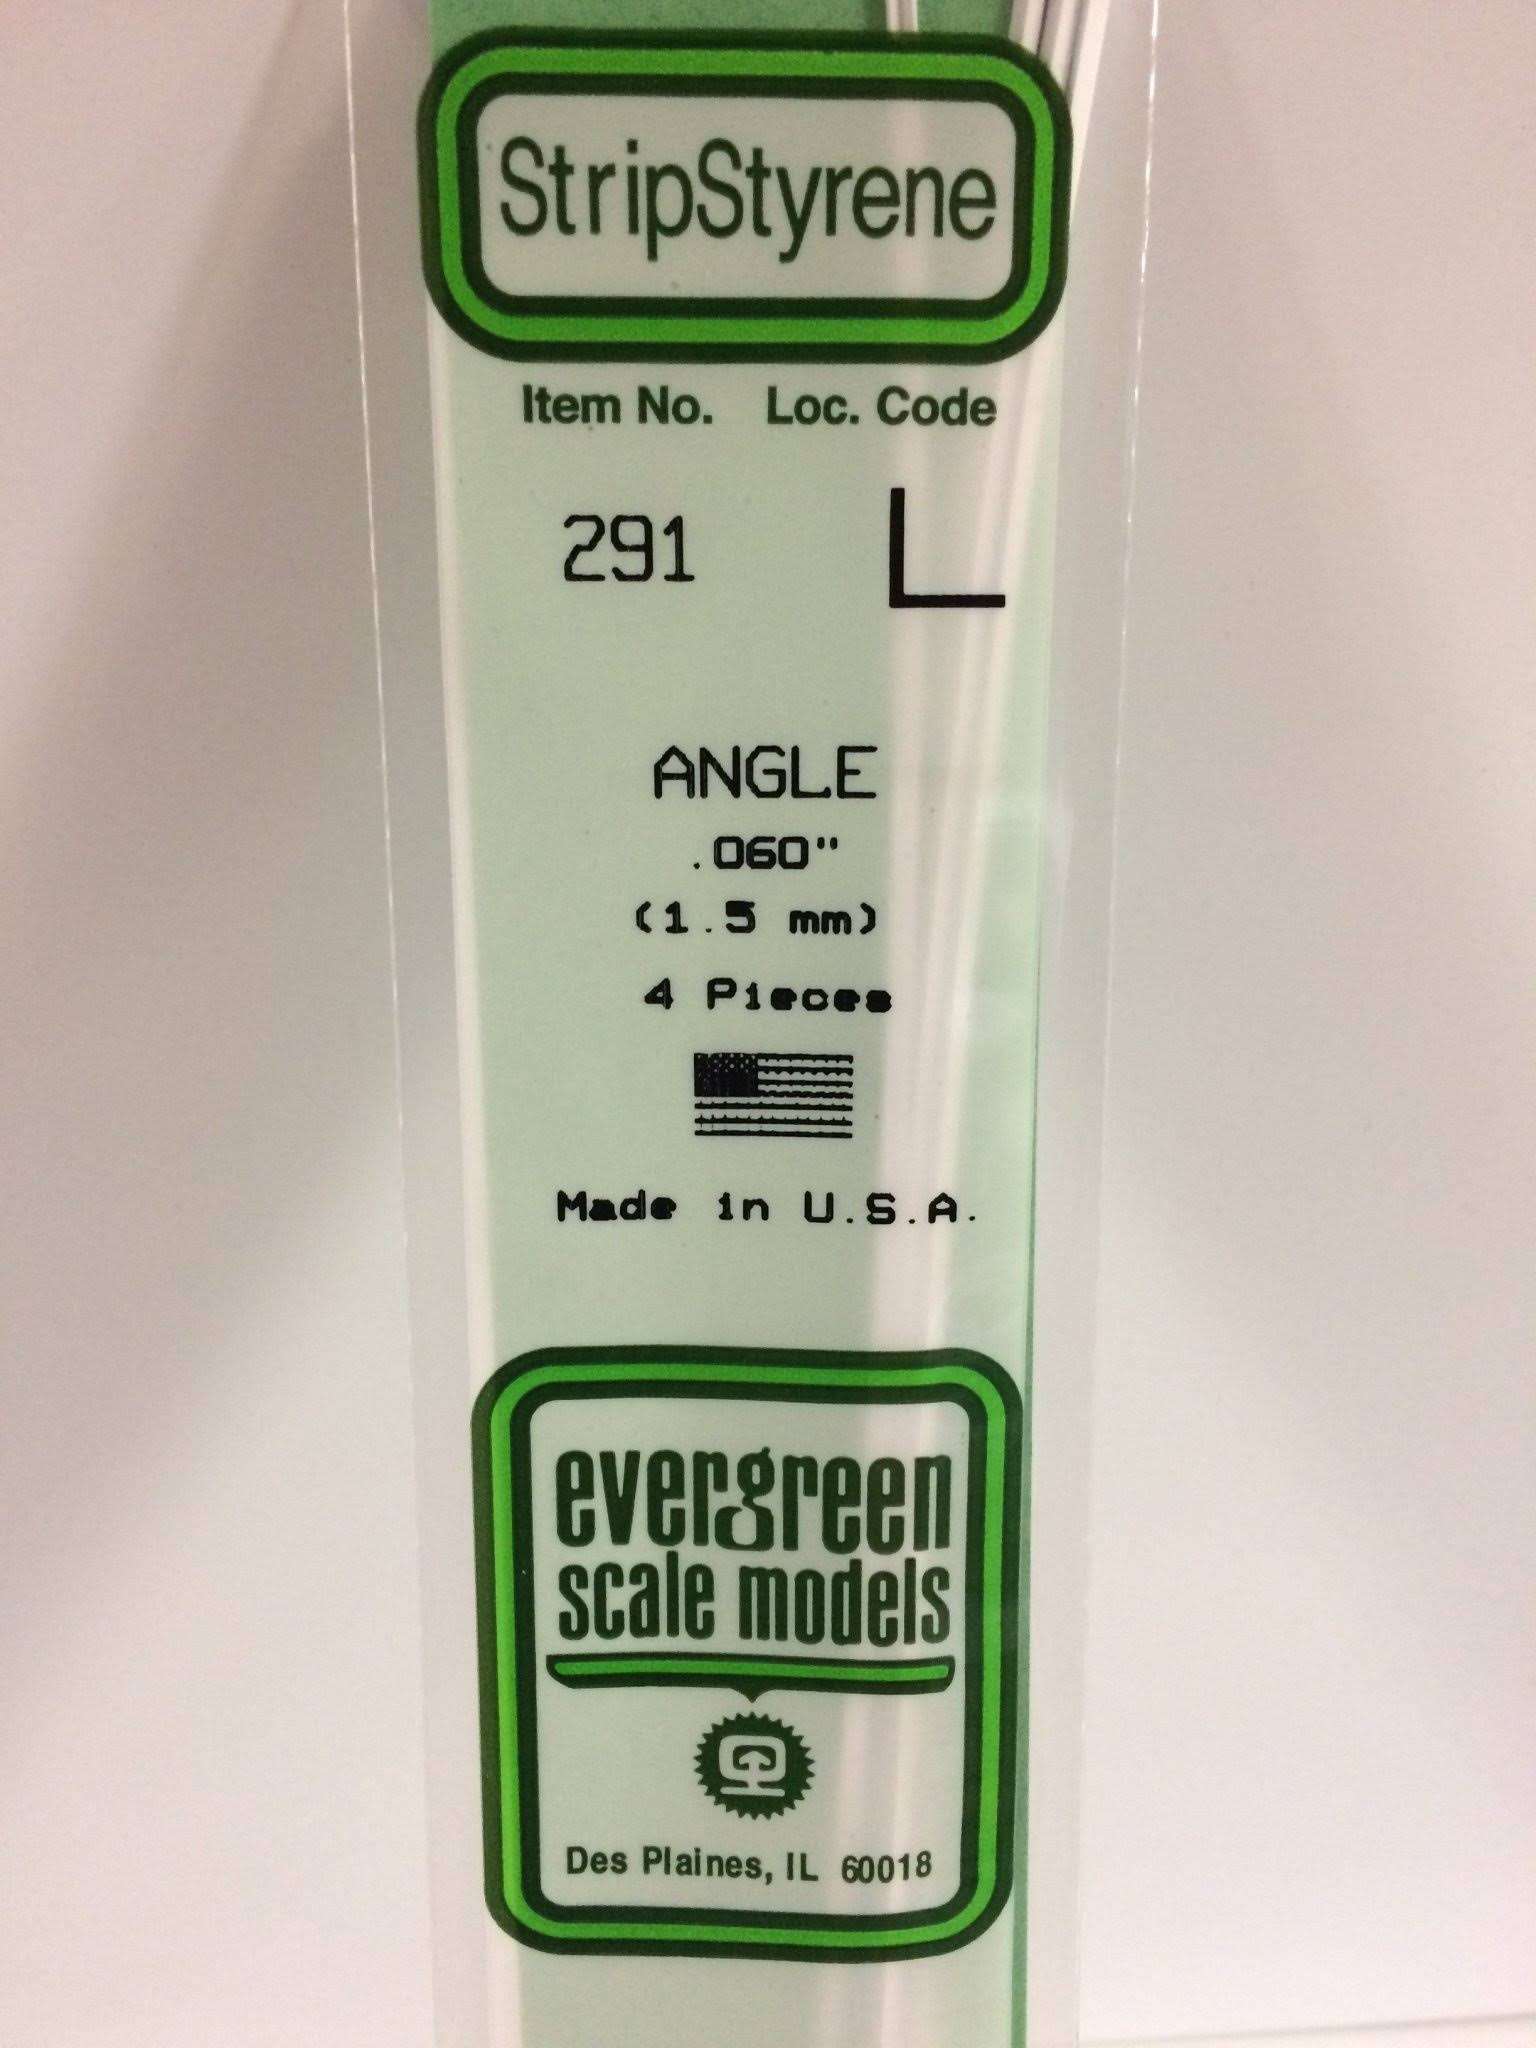 Evergreen Angle .060 1.5mm (4) 291